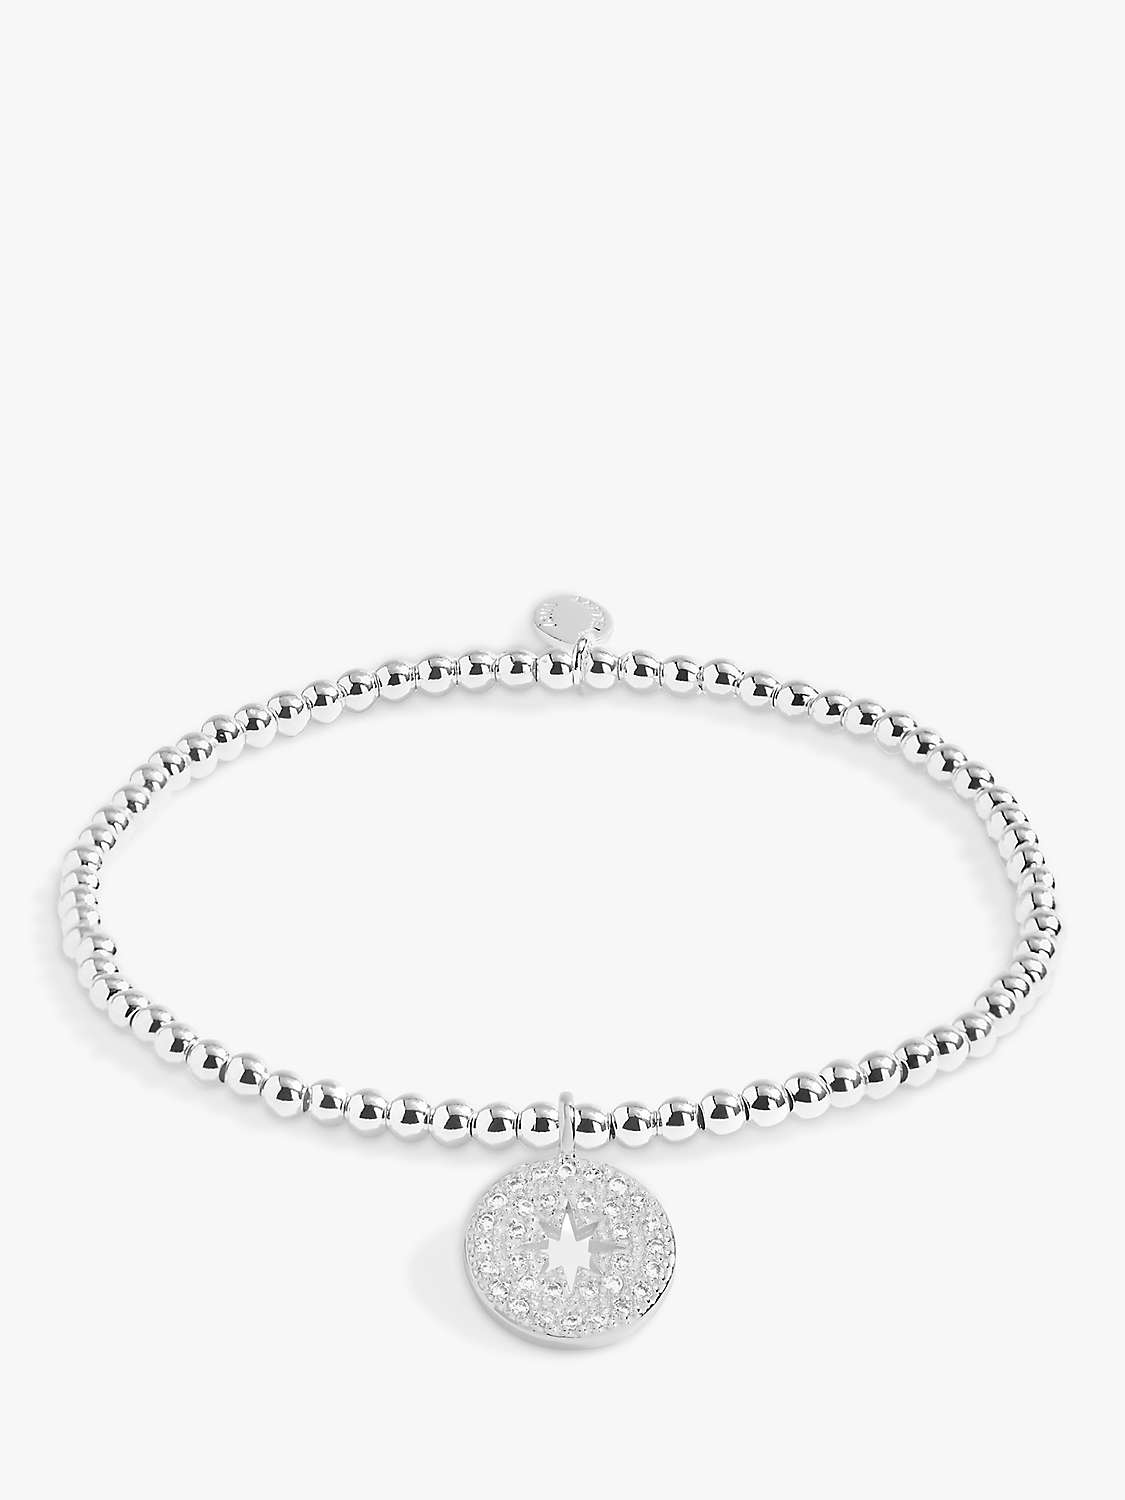 Buy Joma Jewellery 'Live Spontaneously' Charm Bracelet, Silver Online at johnlewis.com